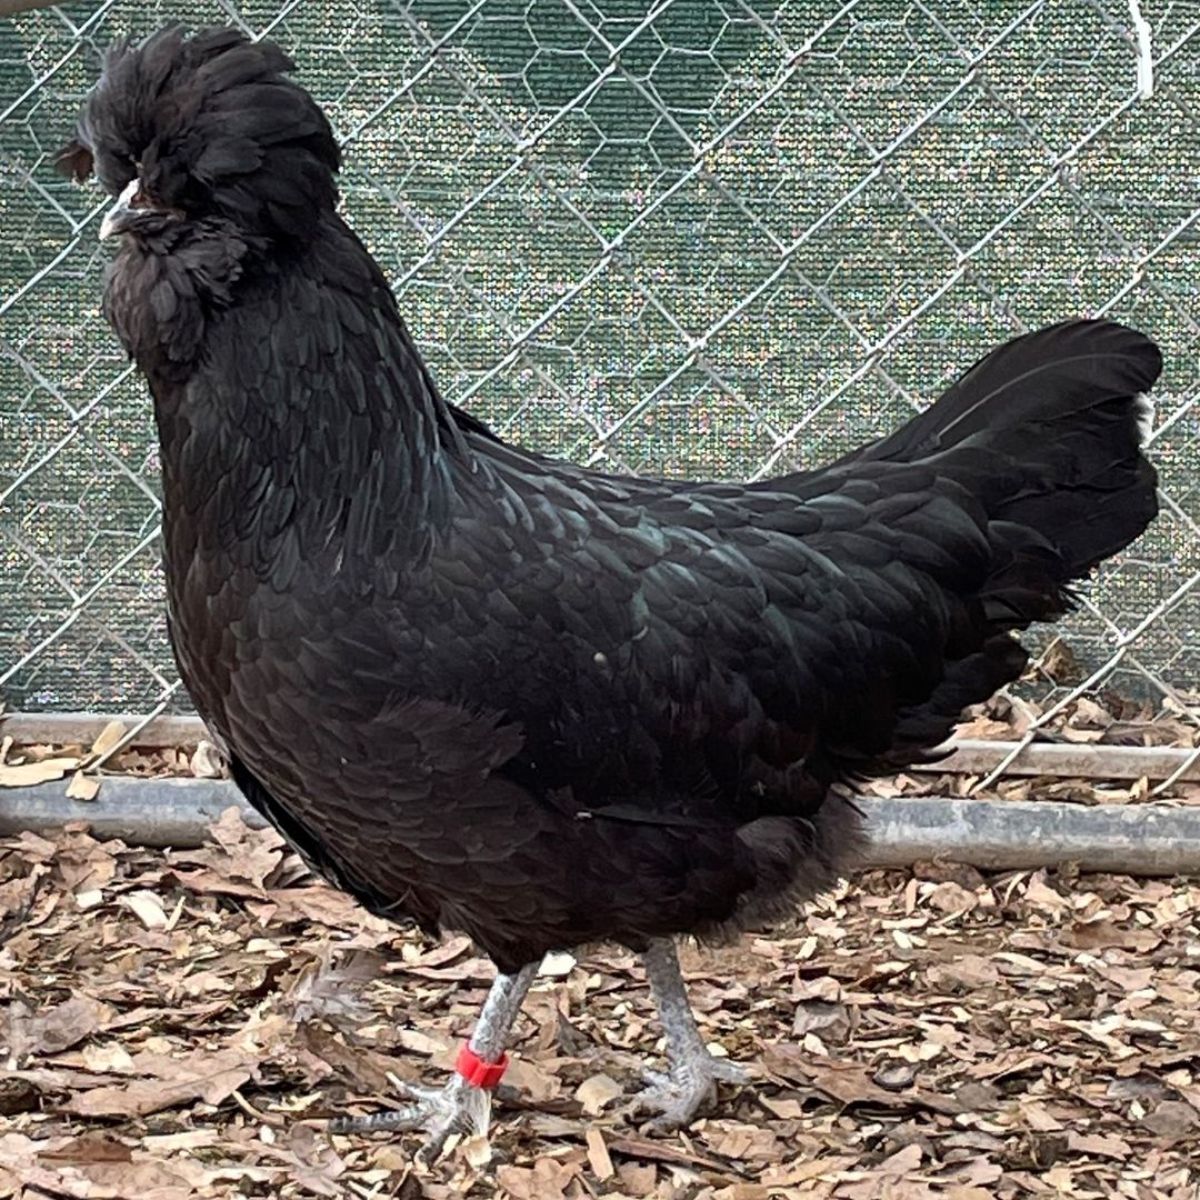 A beautiful black Crevecoeur hen in a backyard.